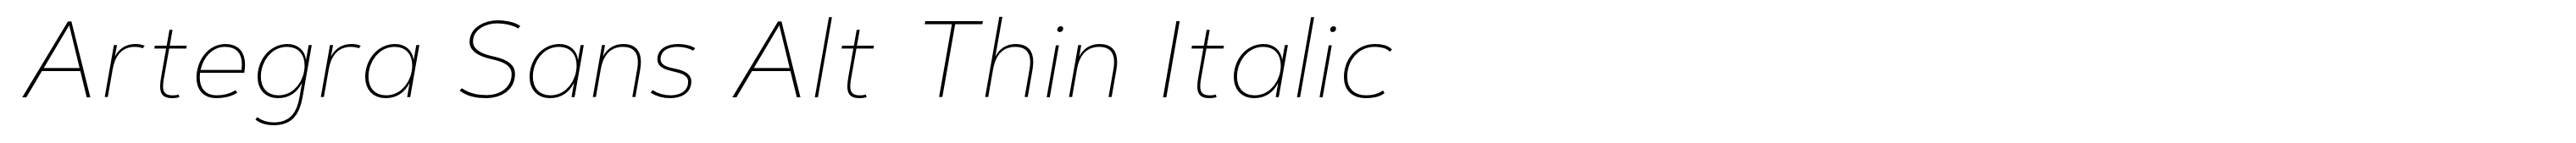 Artegra Sans Alt Thin Italic